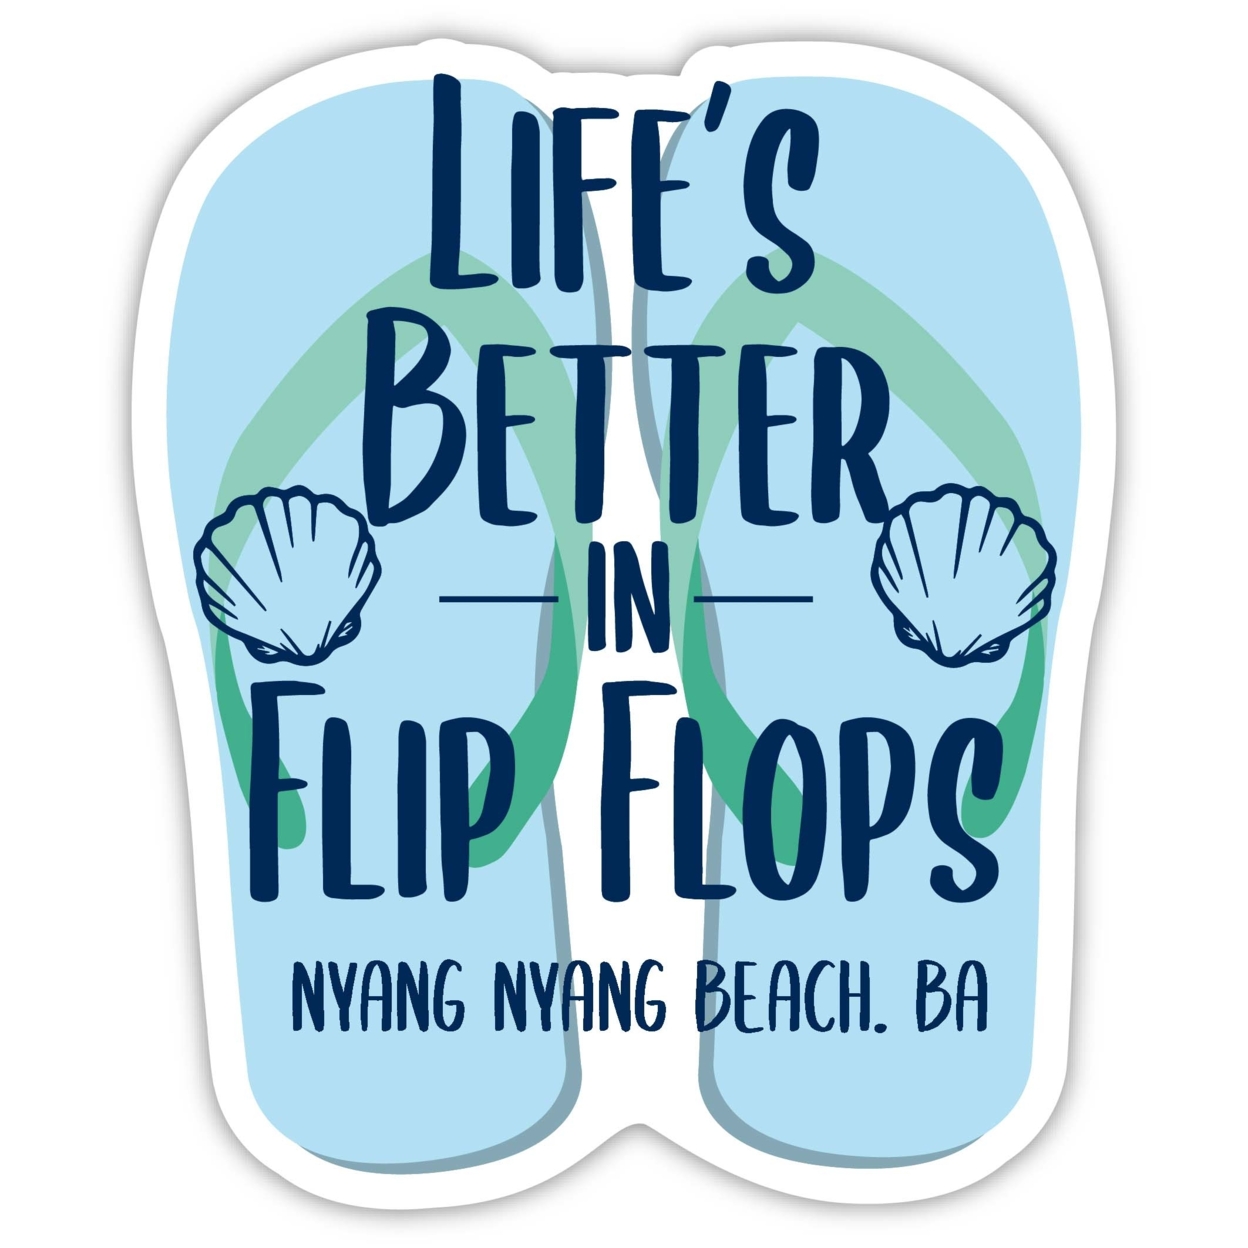 Nyang Nyang Beach Bali Souvenir 4 Inch Vinyl Decal Sticker Flip Flop Design